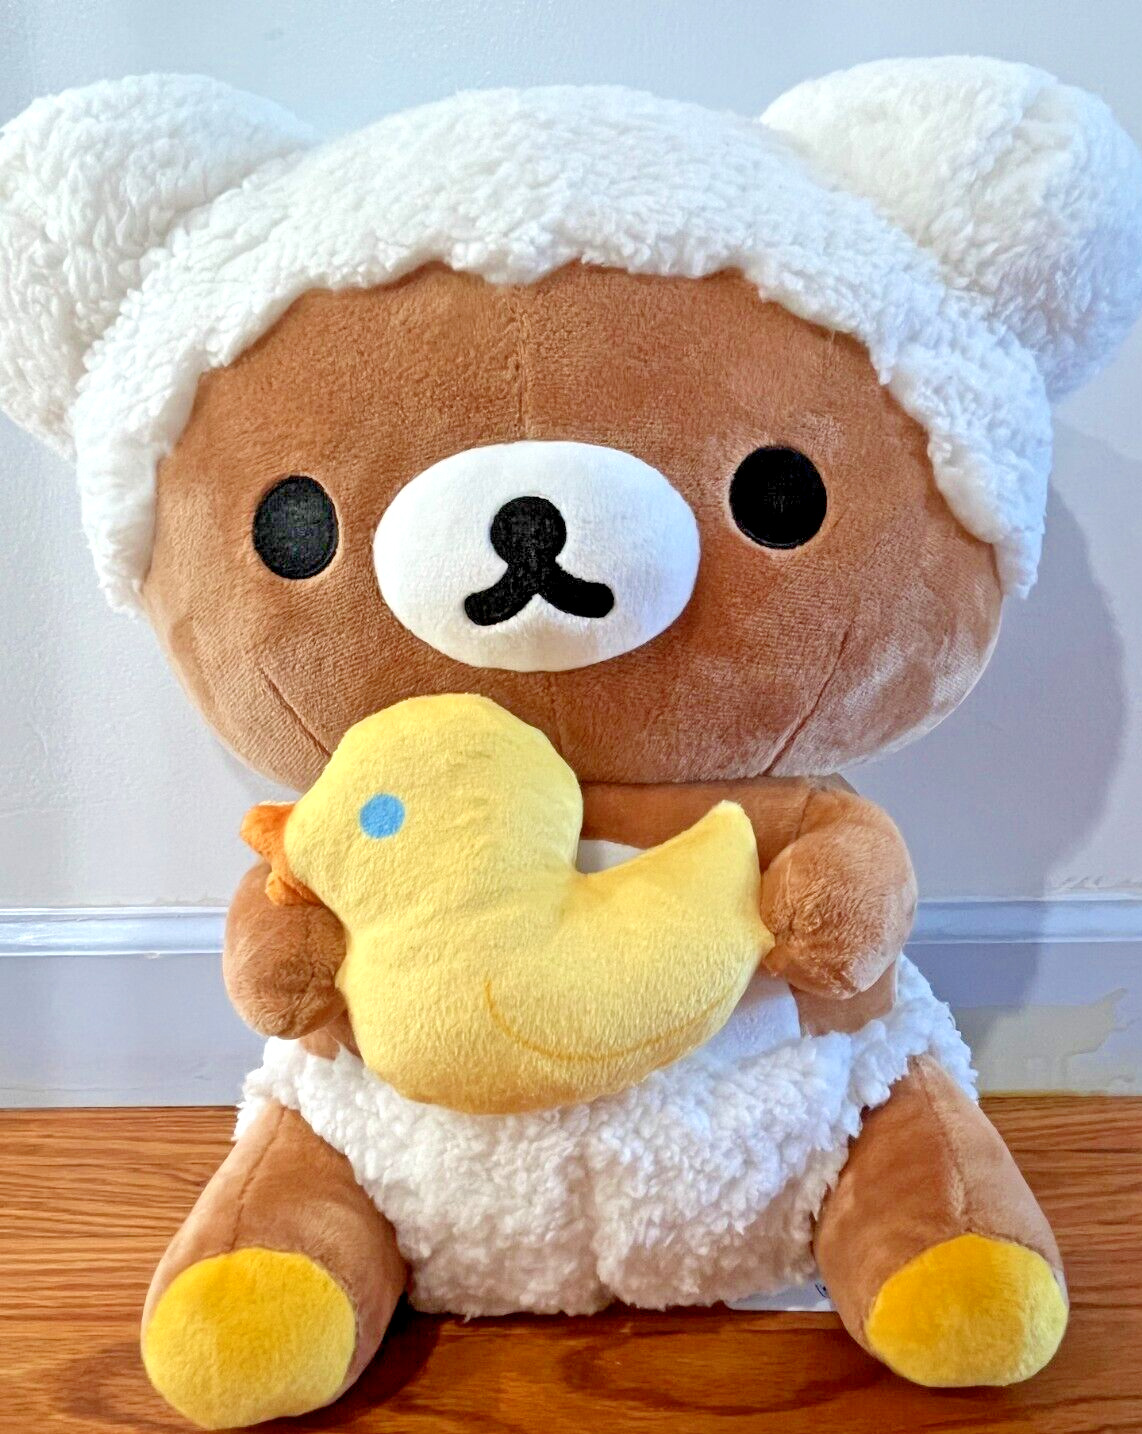 San-X Bathtime rilakkuma with Duck Plush 14” New with Tag GS9843